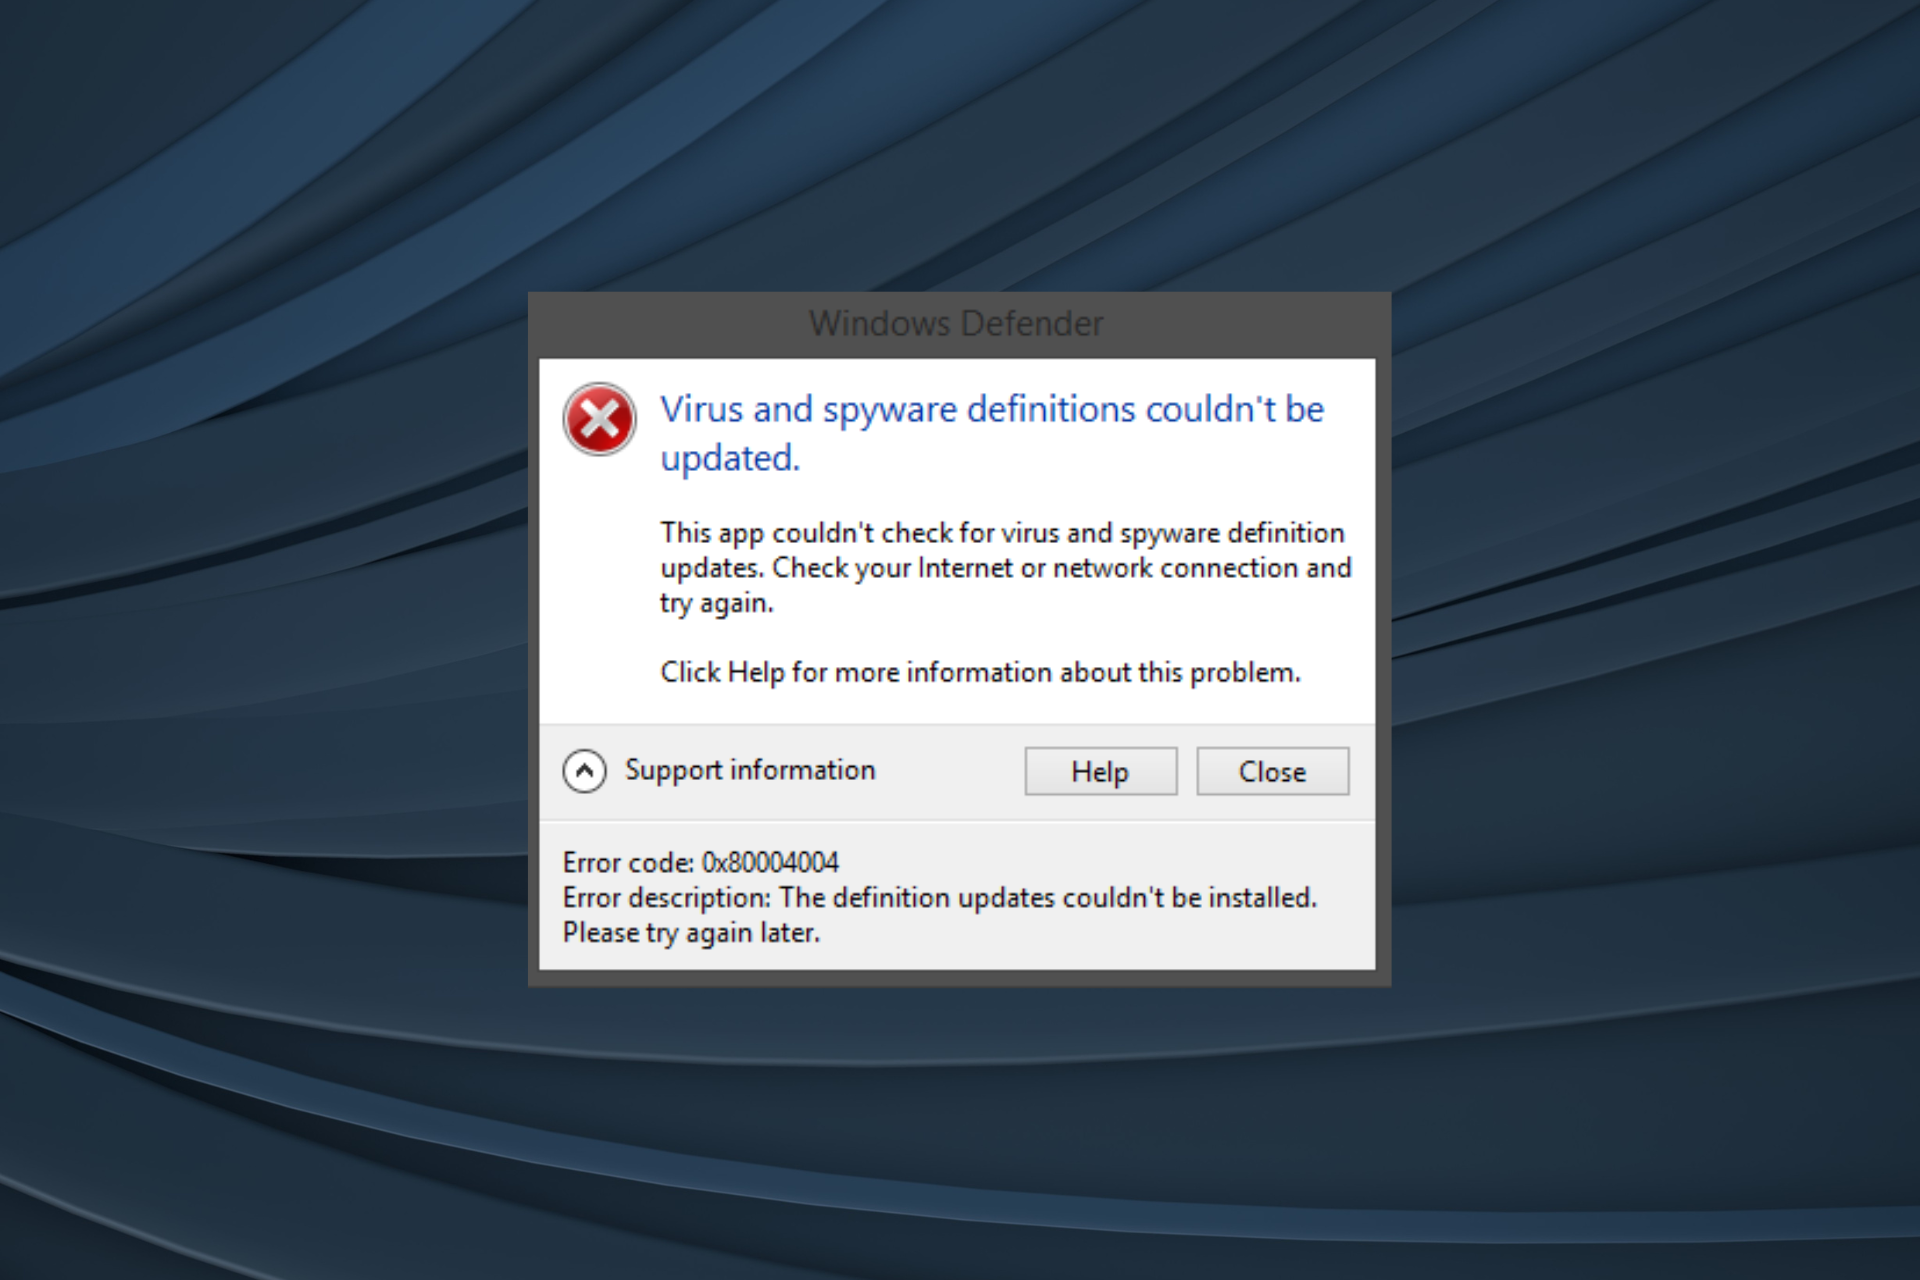 fix 0x80004004 in Windows Defender